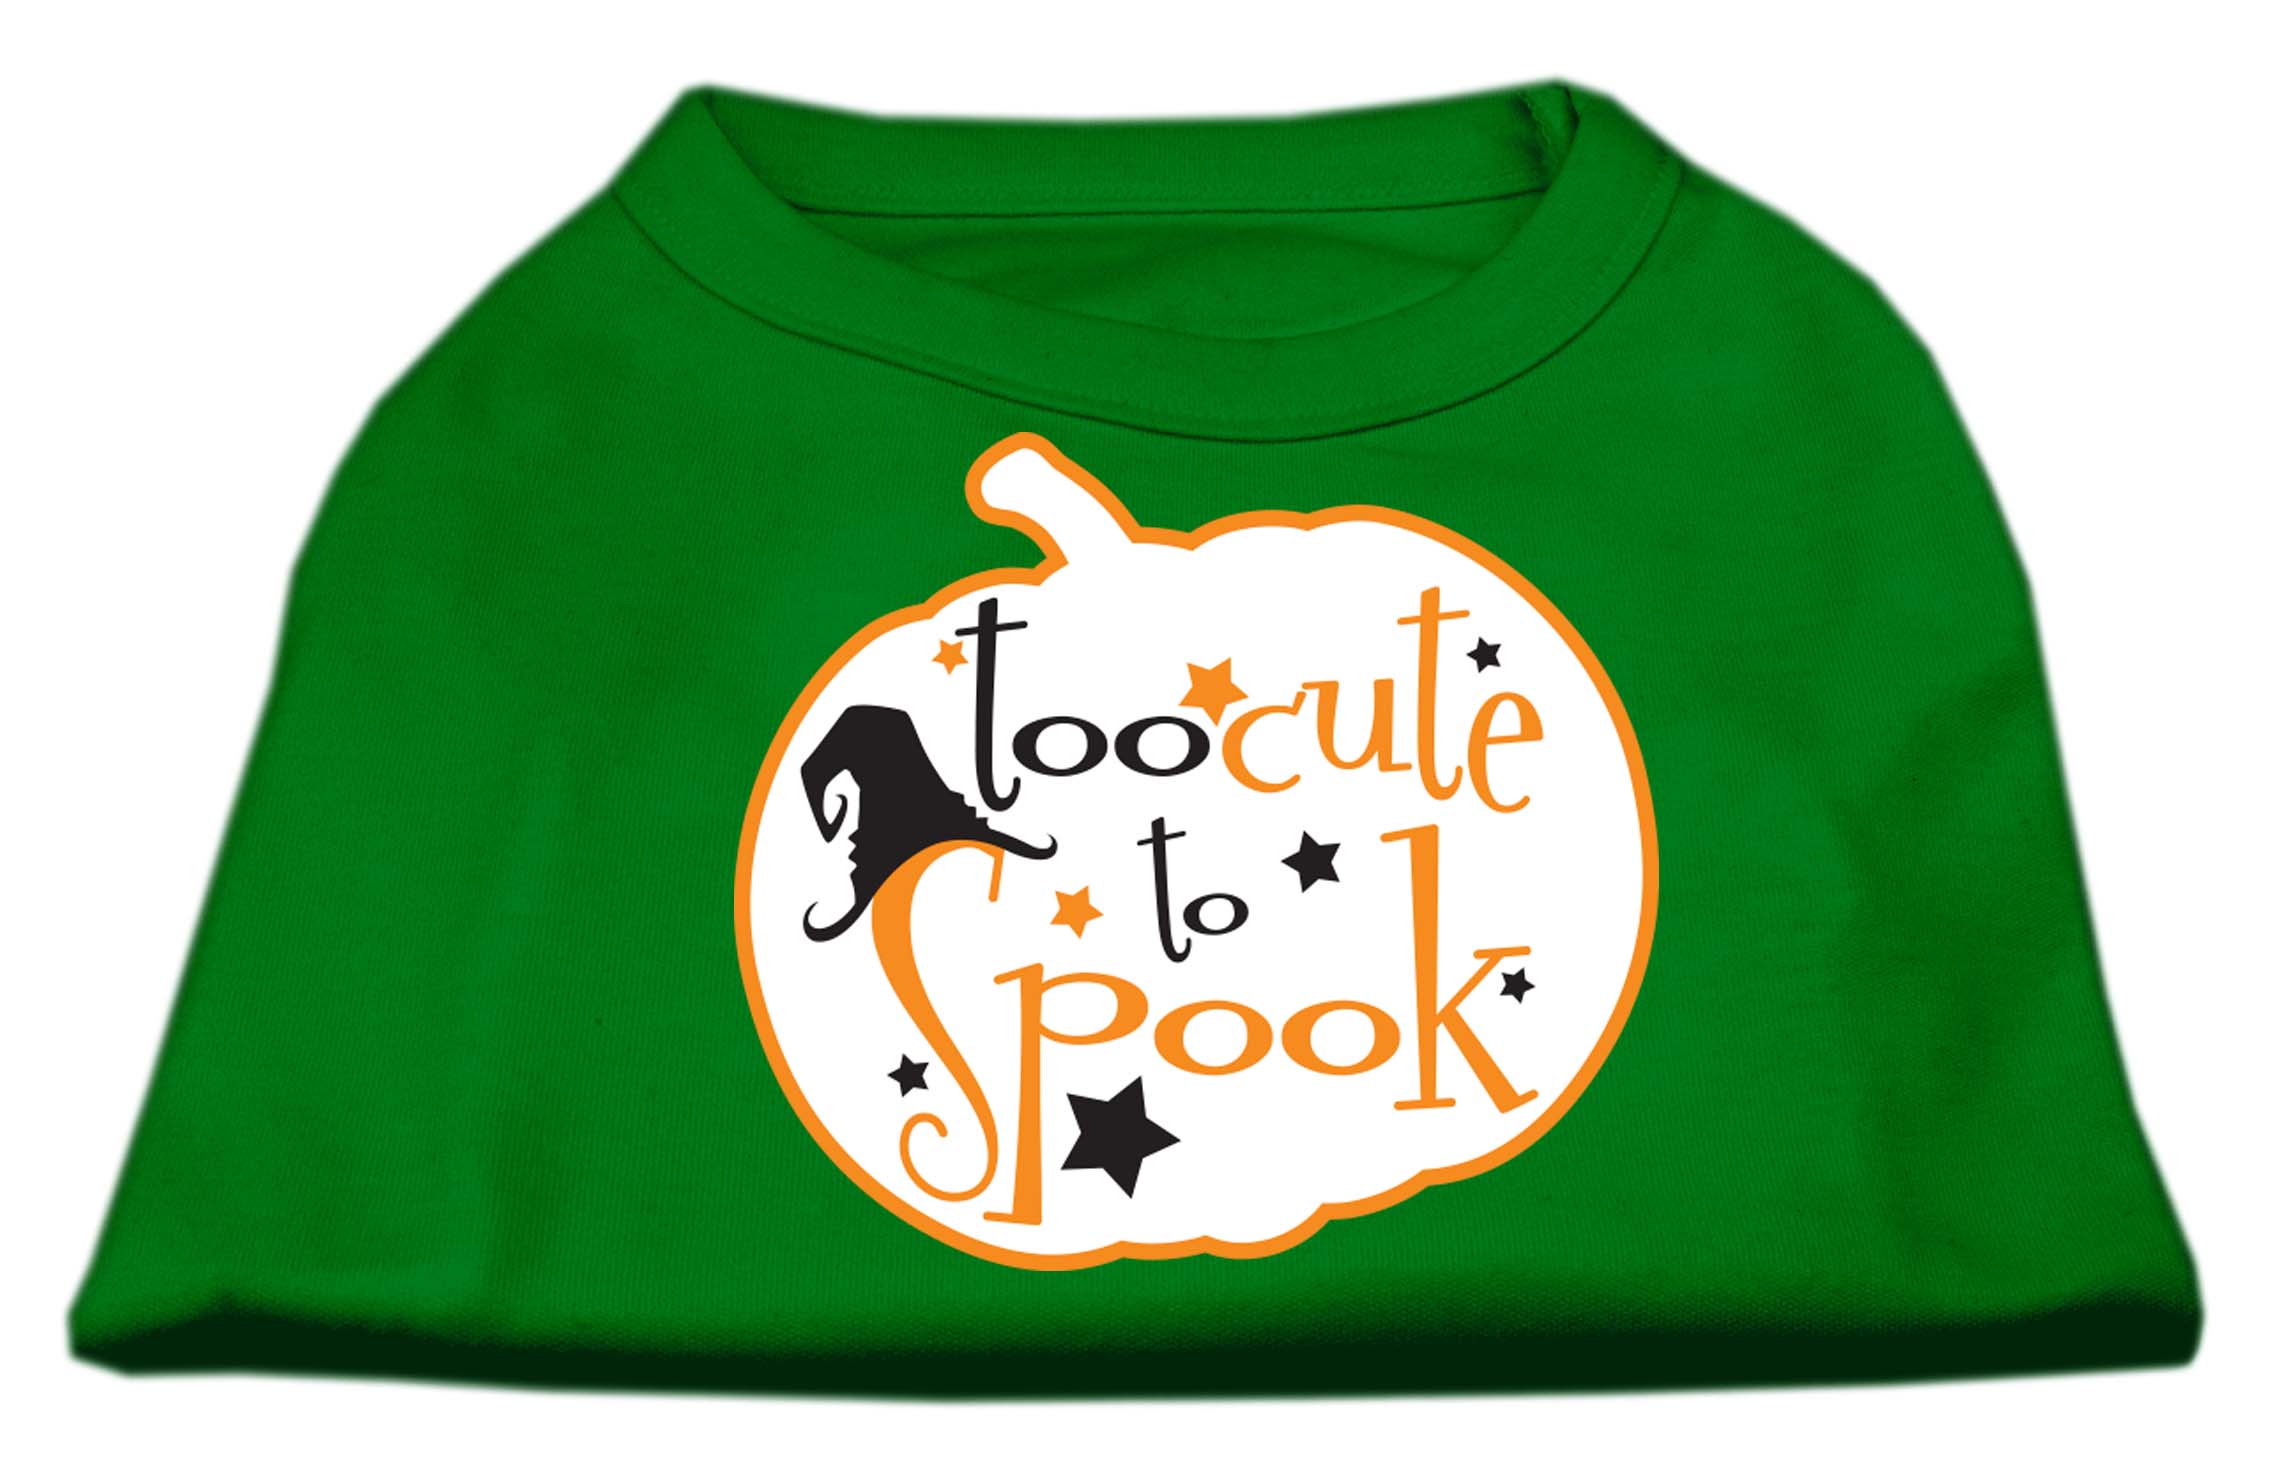 Too Cute to Spook Screen Print Dog Shirt Green XS